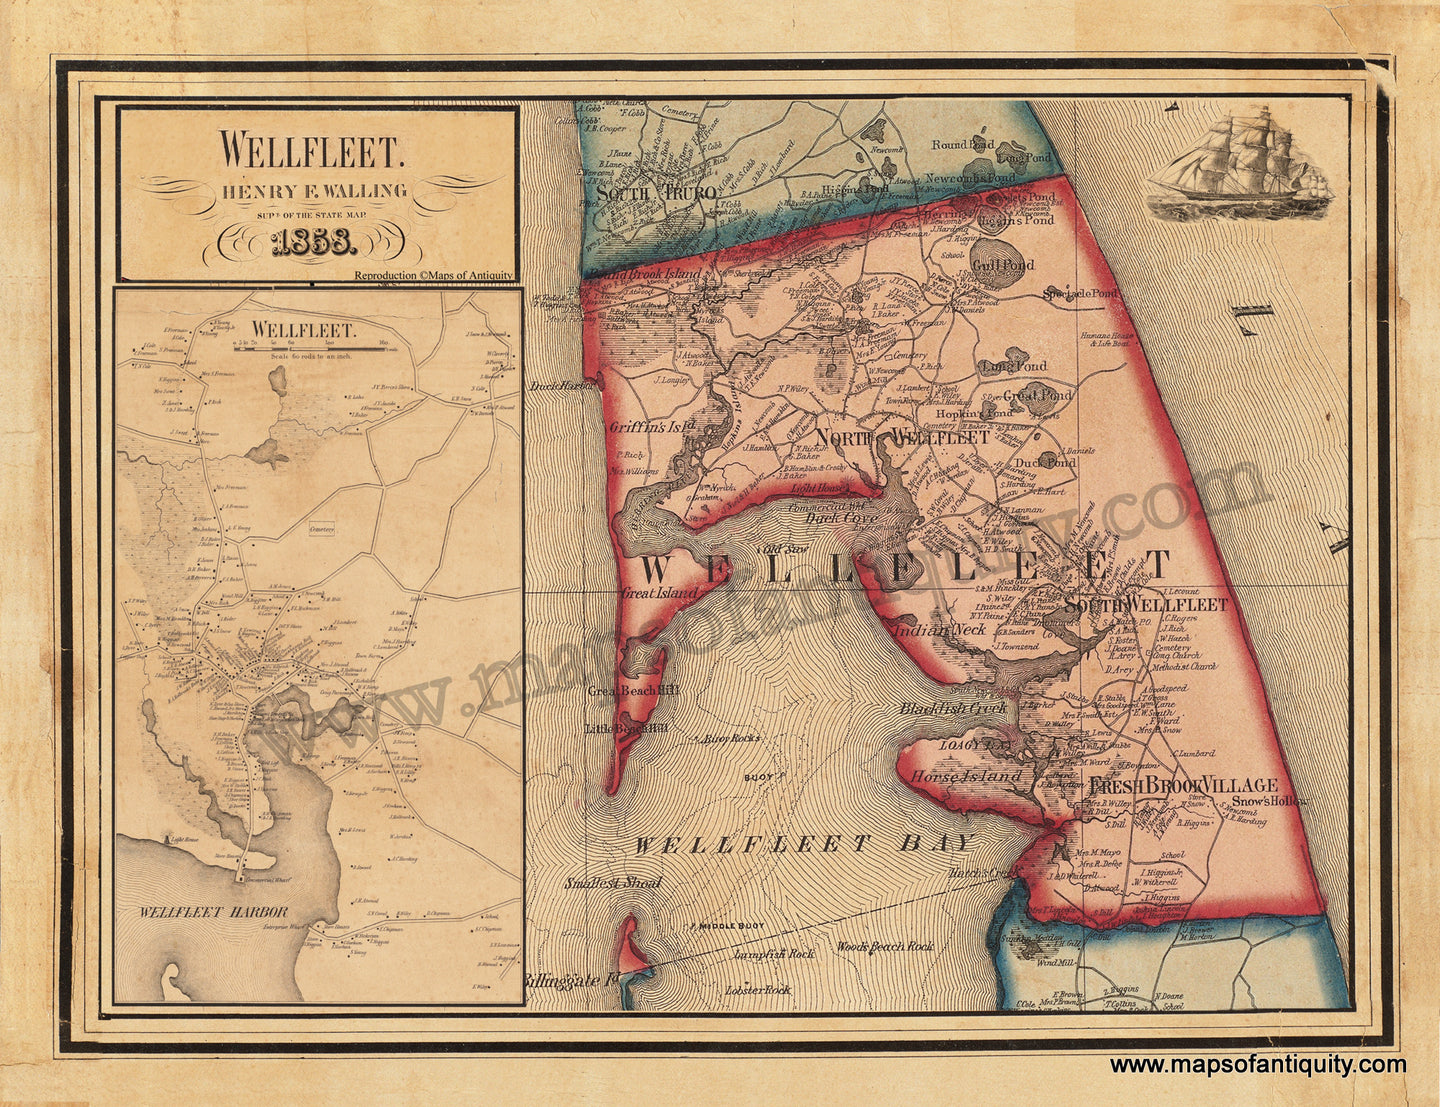 Reproduction-Wellfleet-1858-1800s-19th-century-Maps-of-Antiquity